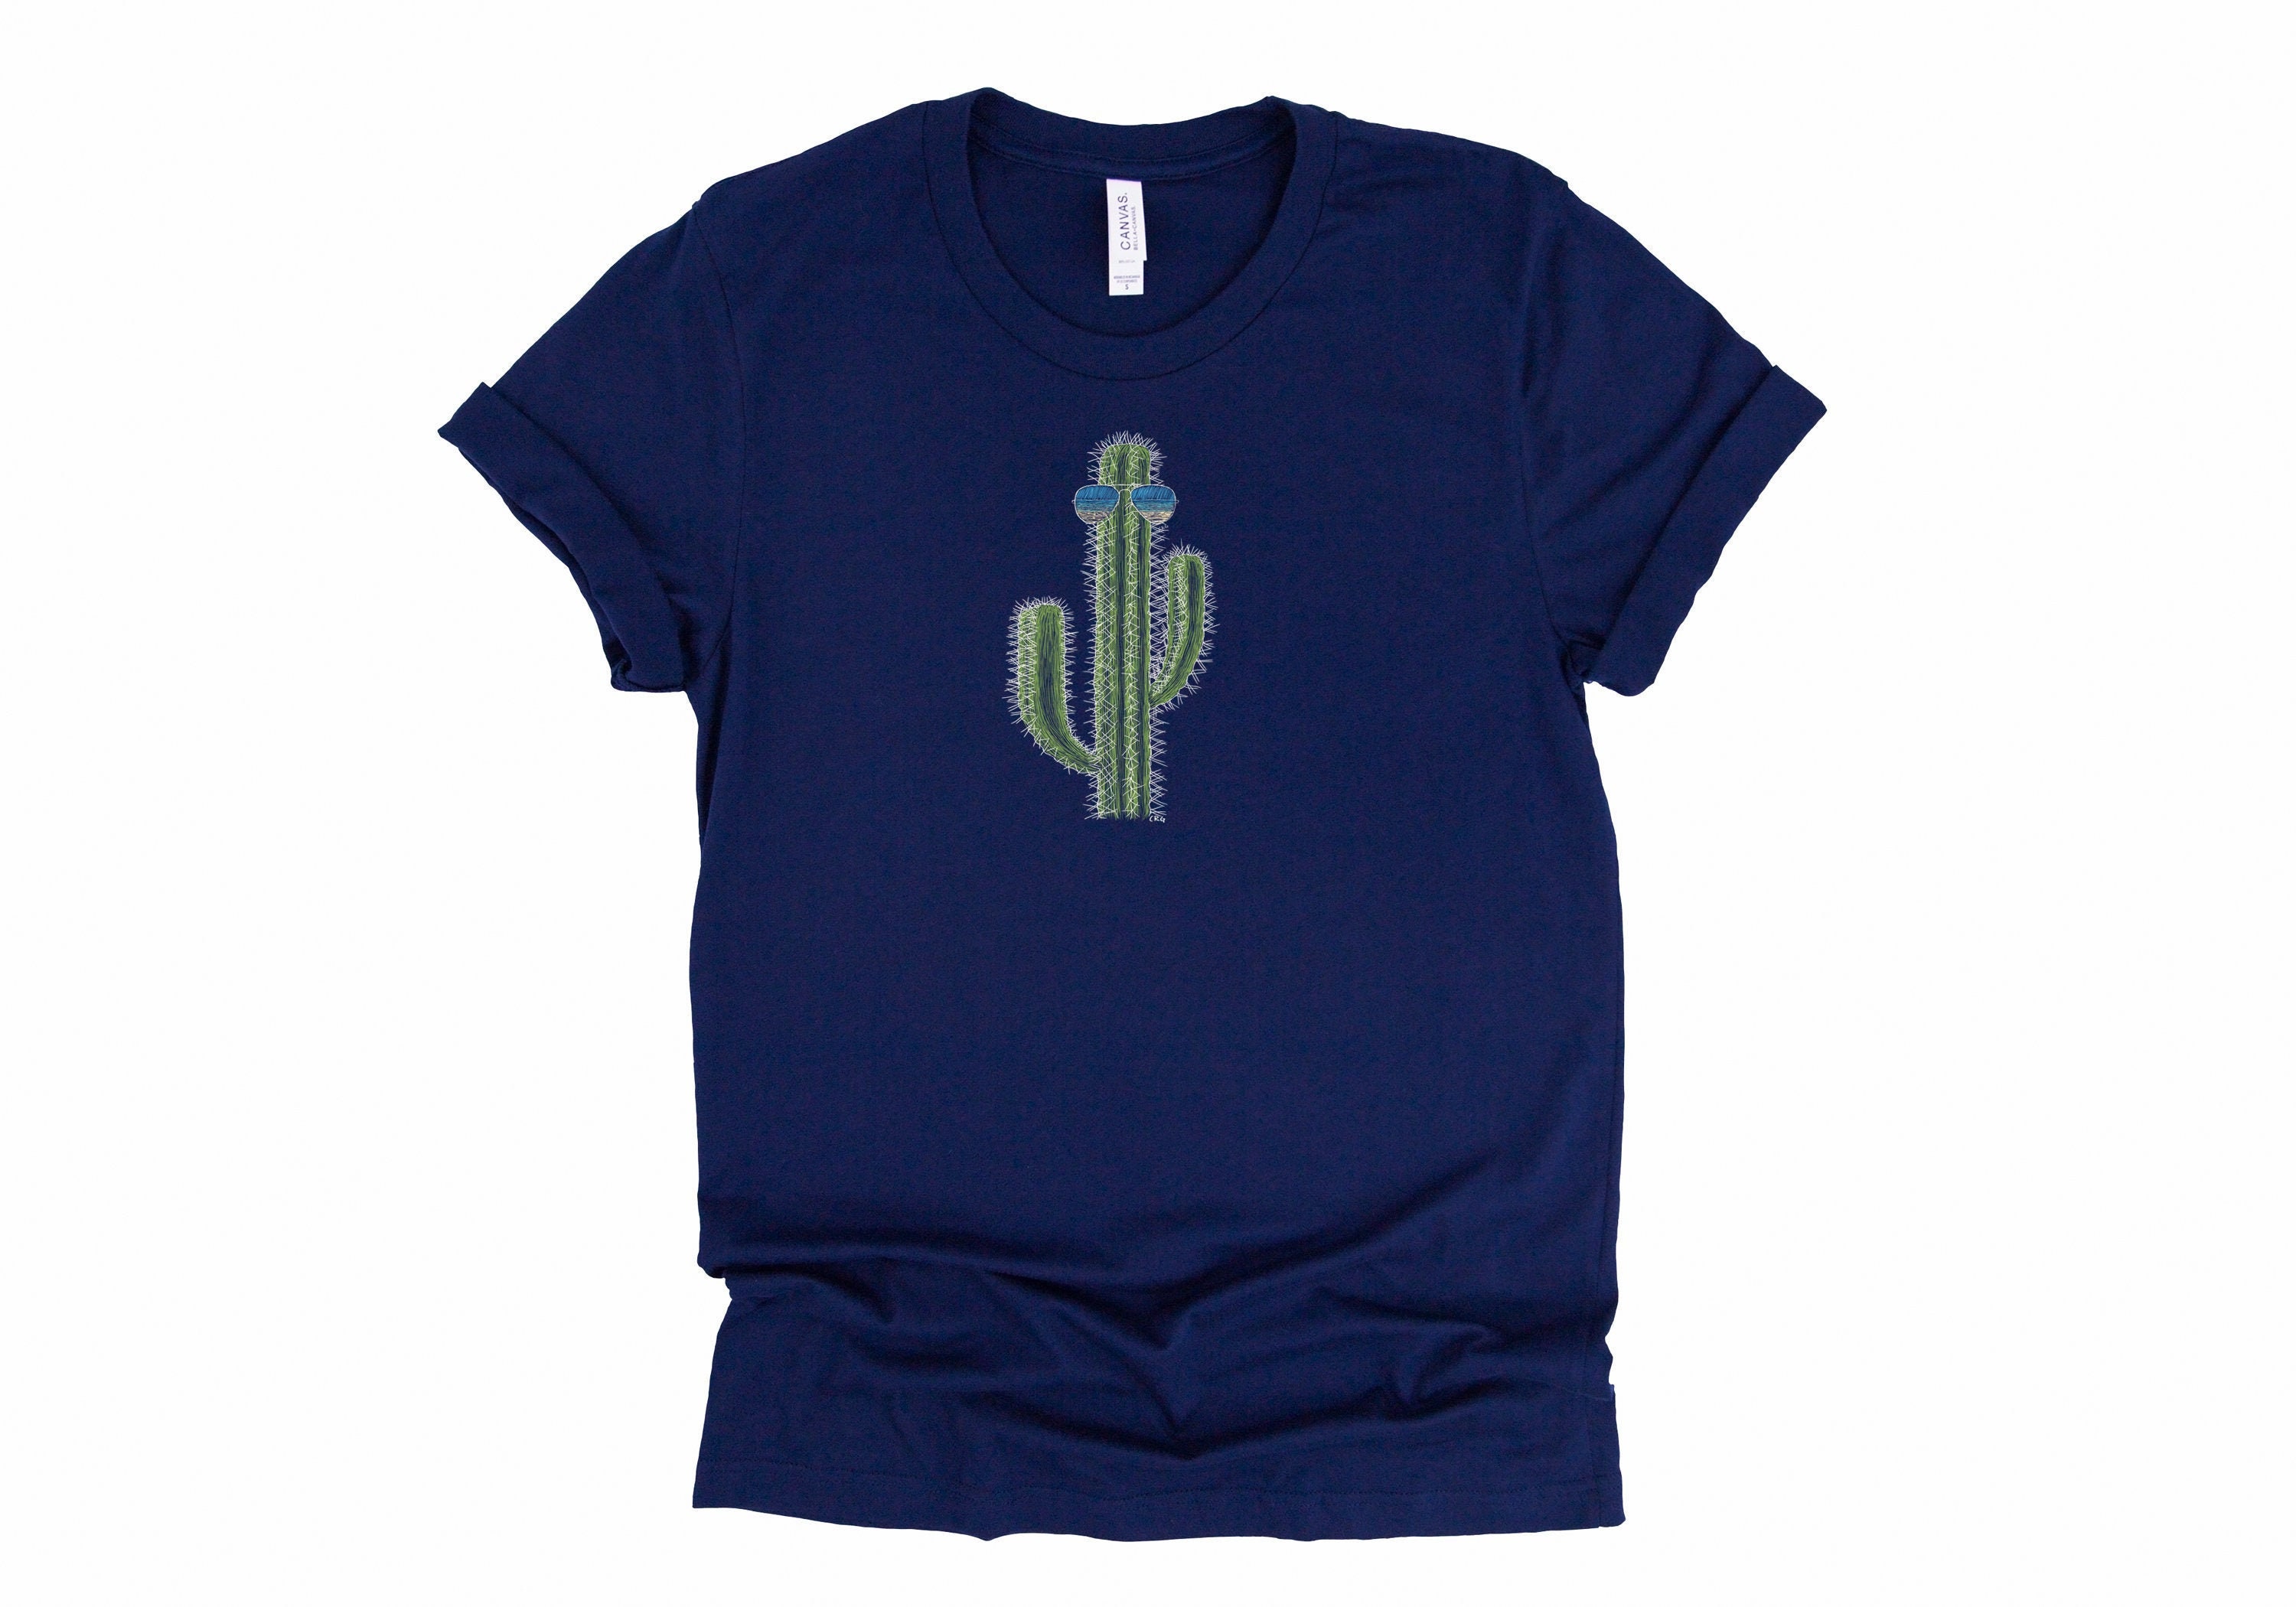 Cactus Shirt / Cactus / Plant Shirt / Desert Shirt / Cactus | Etsy